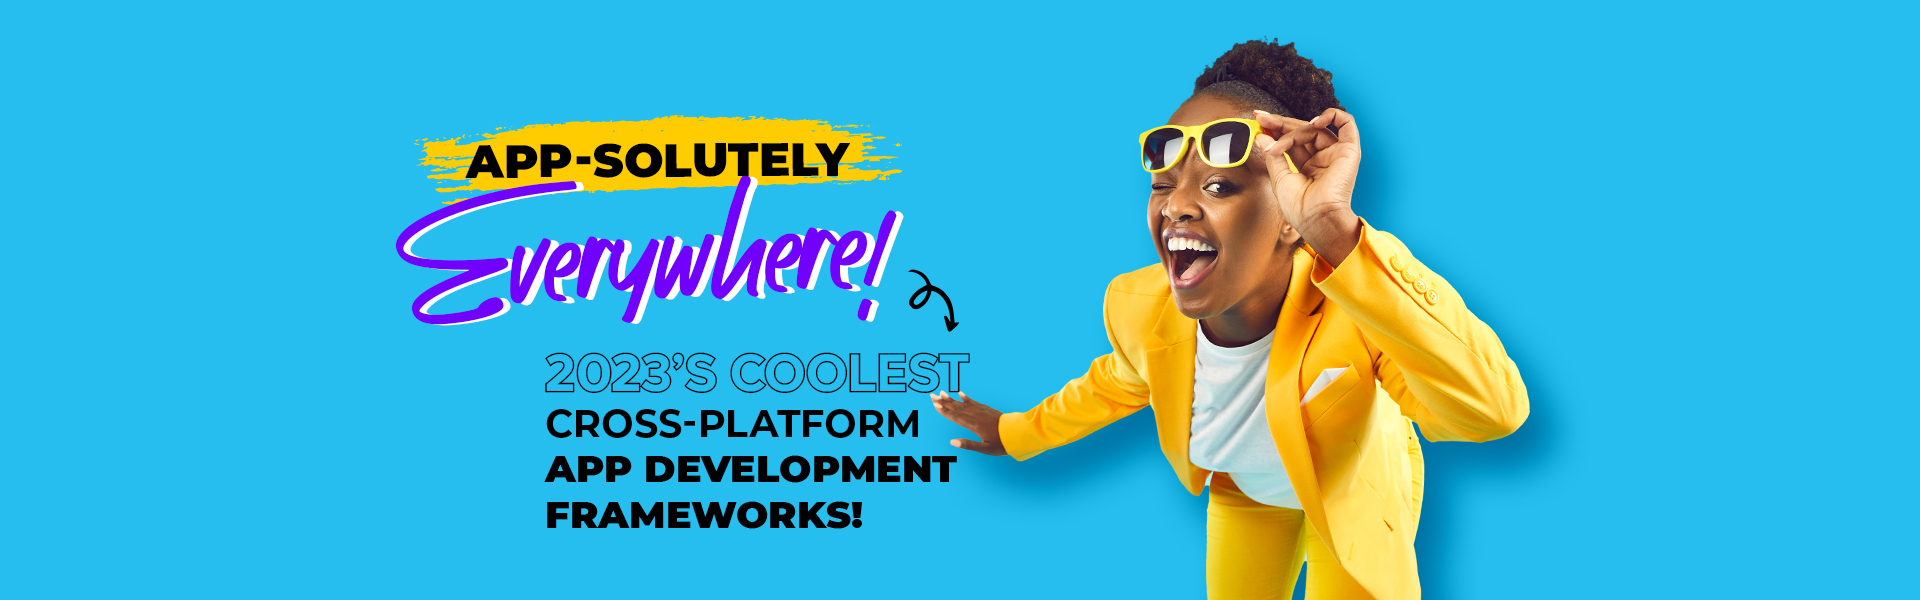 Cross-Platform App Development Frameworks